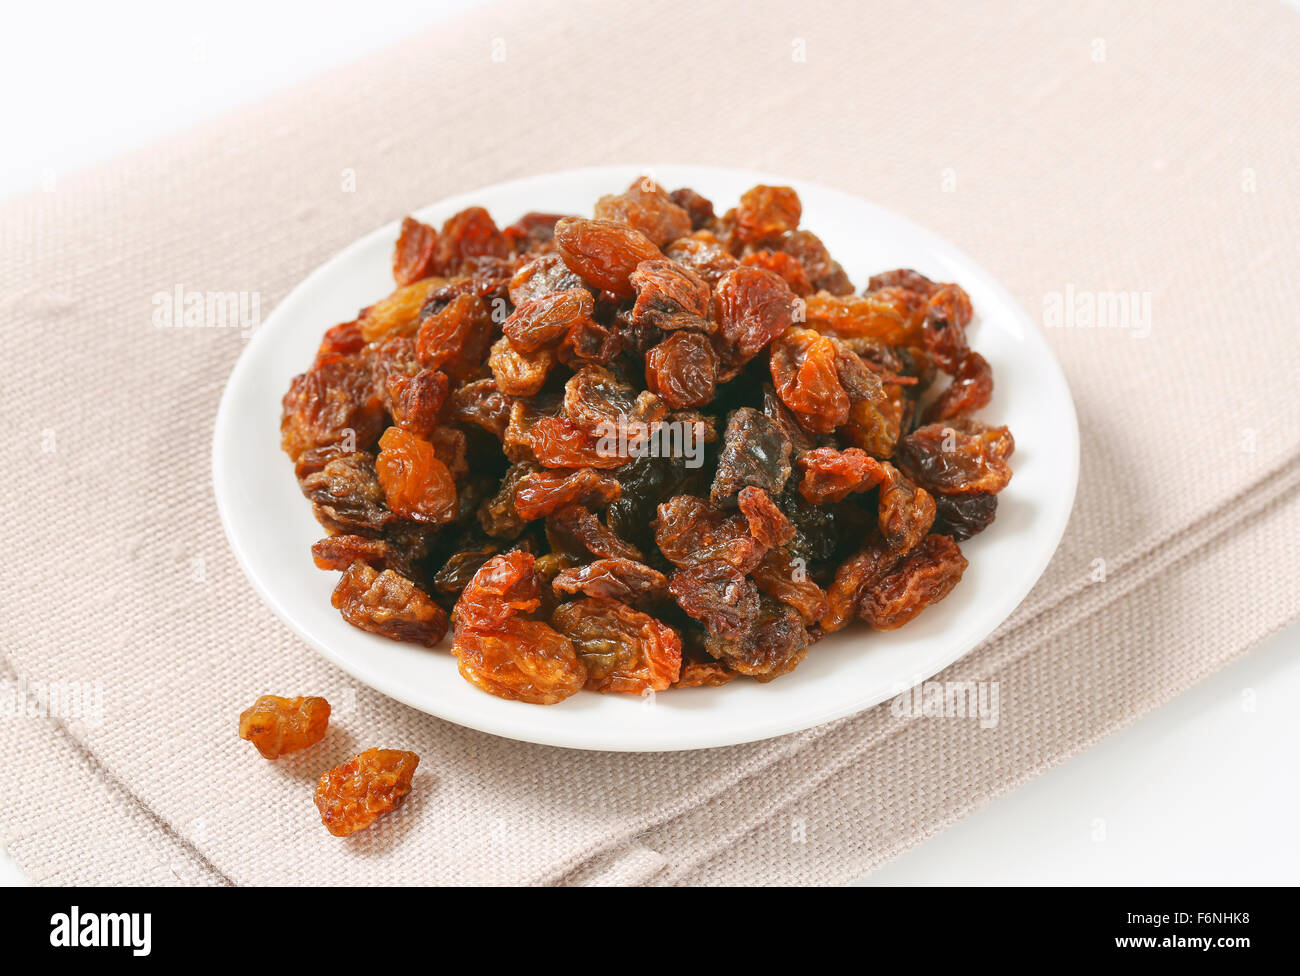 plate of raisins on beige place mat Stock Photo